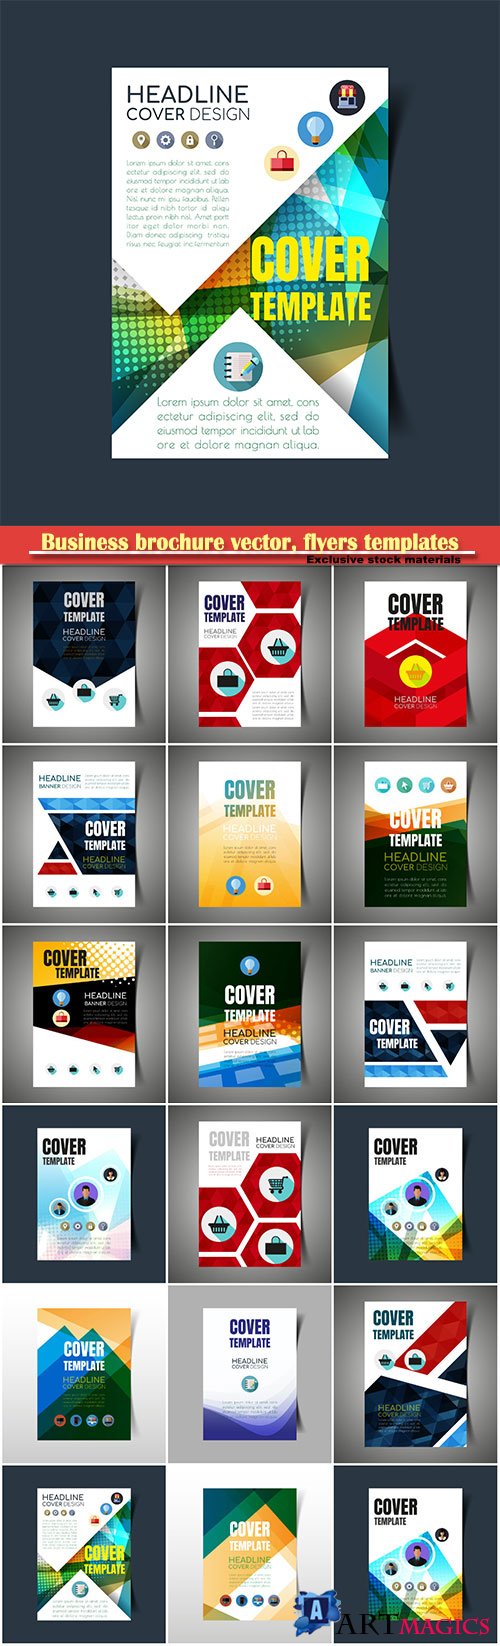 Business brochure vector, flyers templates, report cover design # 81